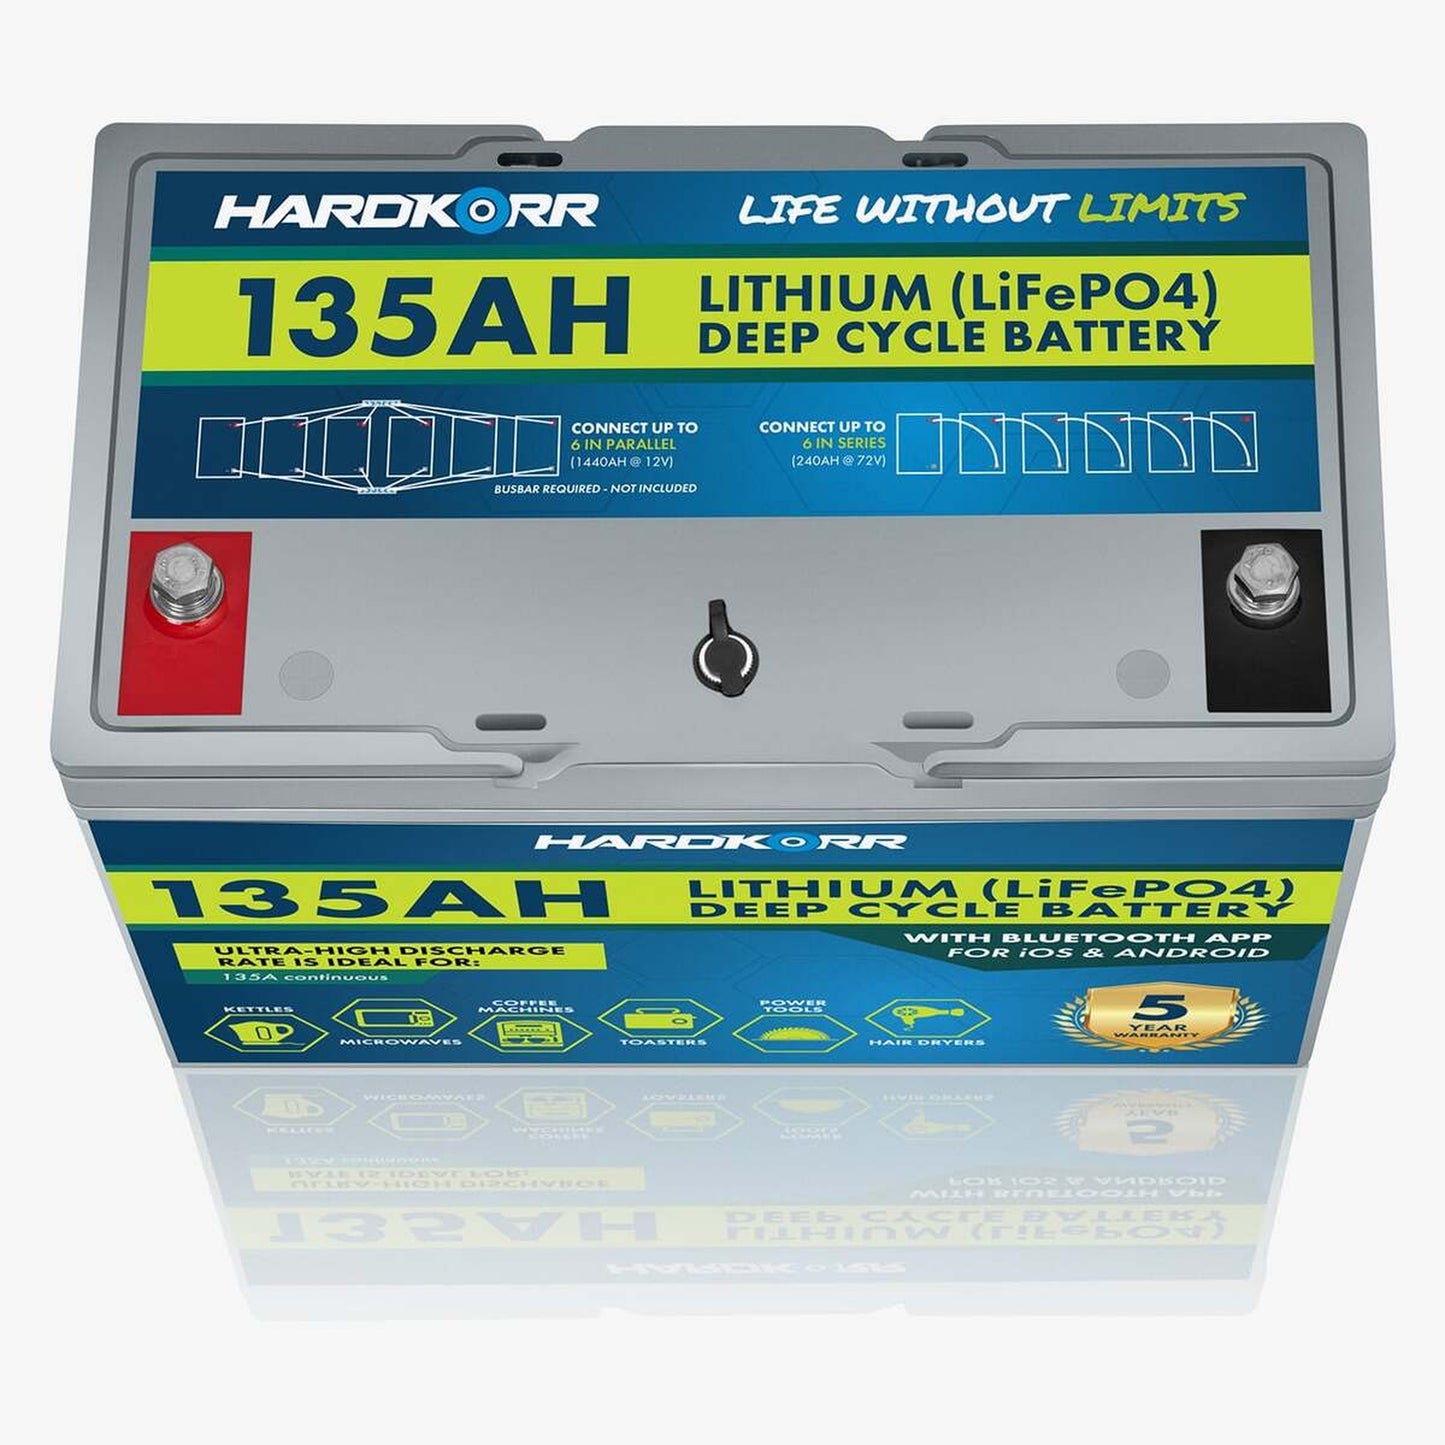 Hard Korr 135Ah Lithium (LiFePO4) Deep Cycle Battery w/Bluetooth